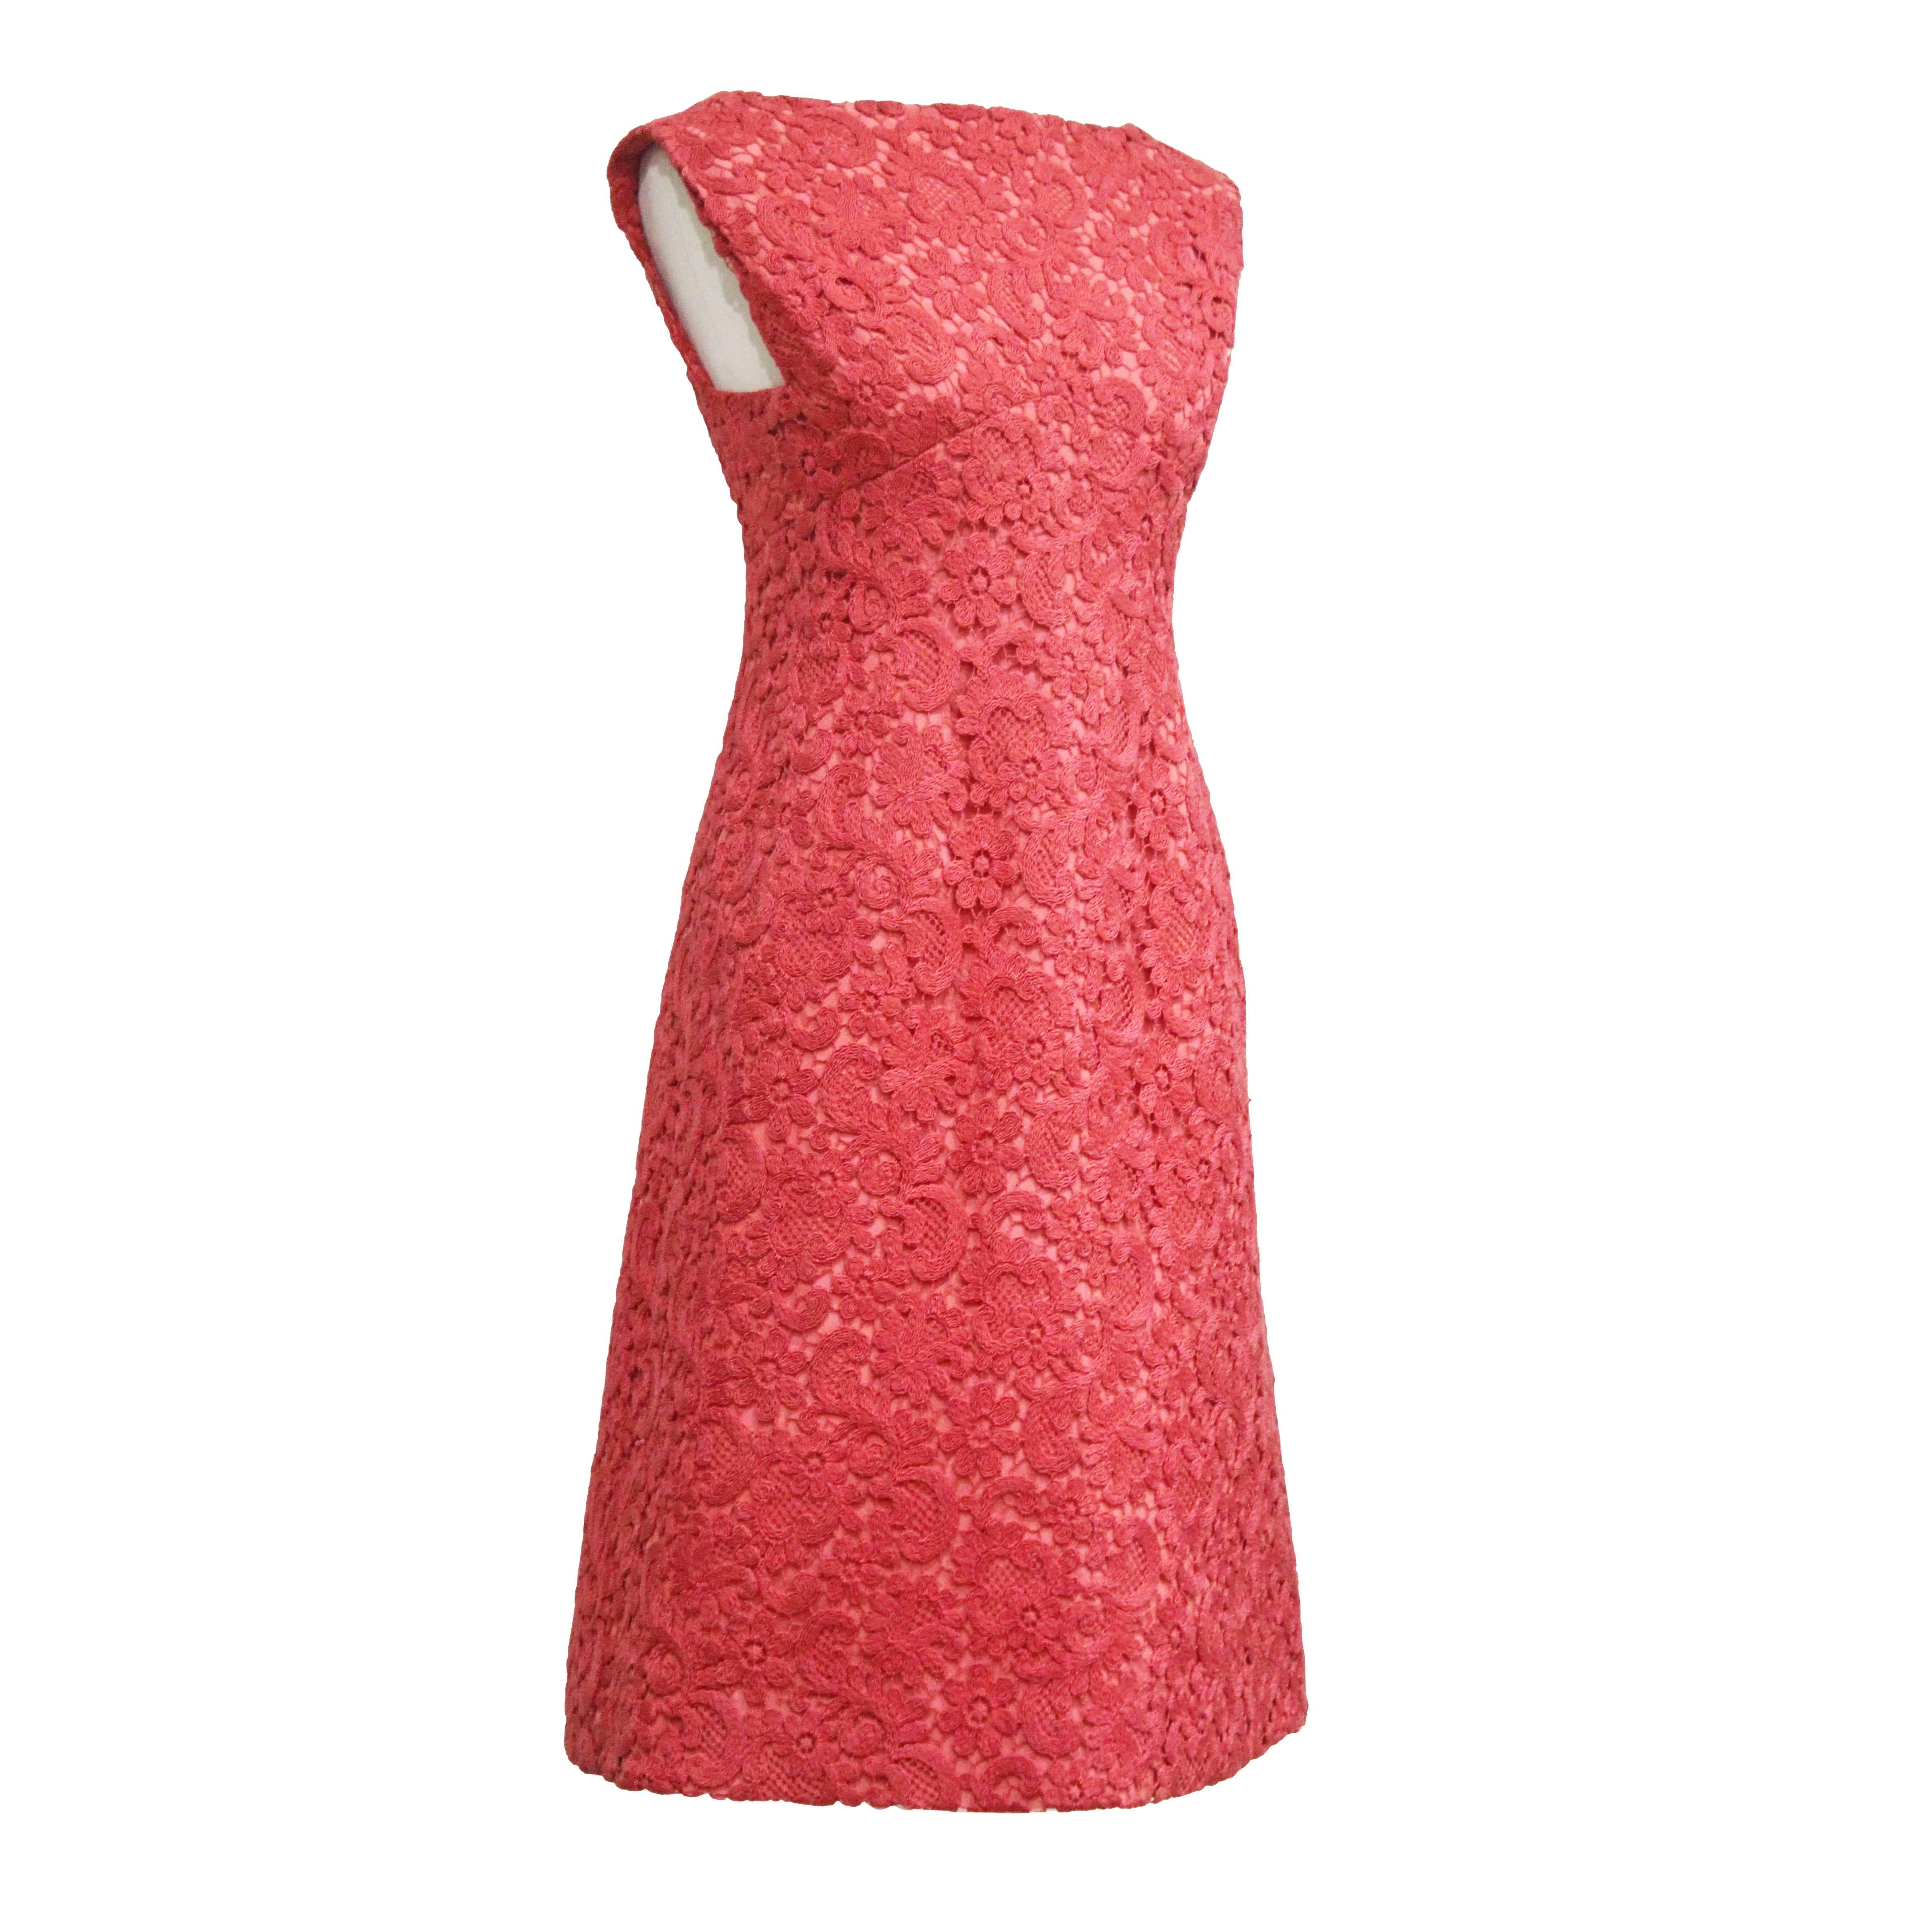 Rose Bertin haute couture macrame lace coral a-line dress, c. 1960s 